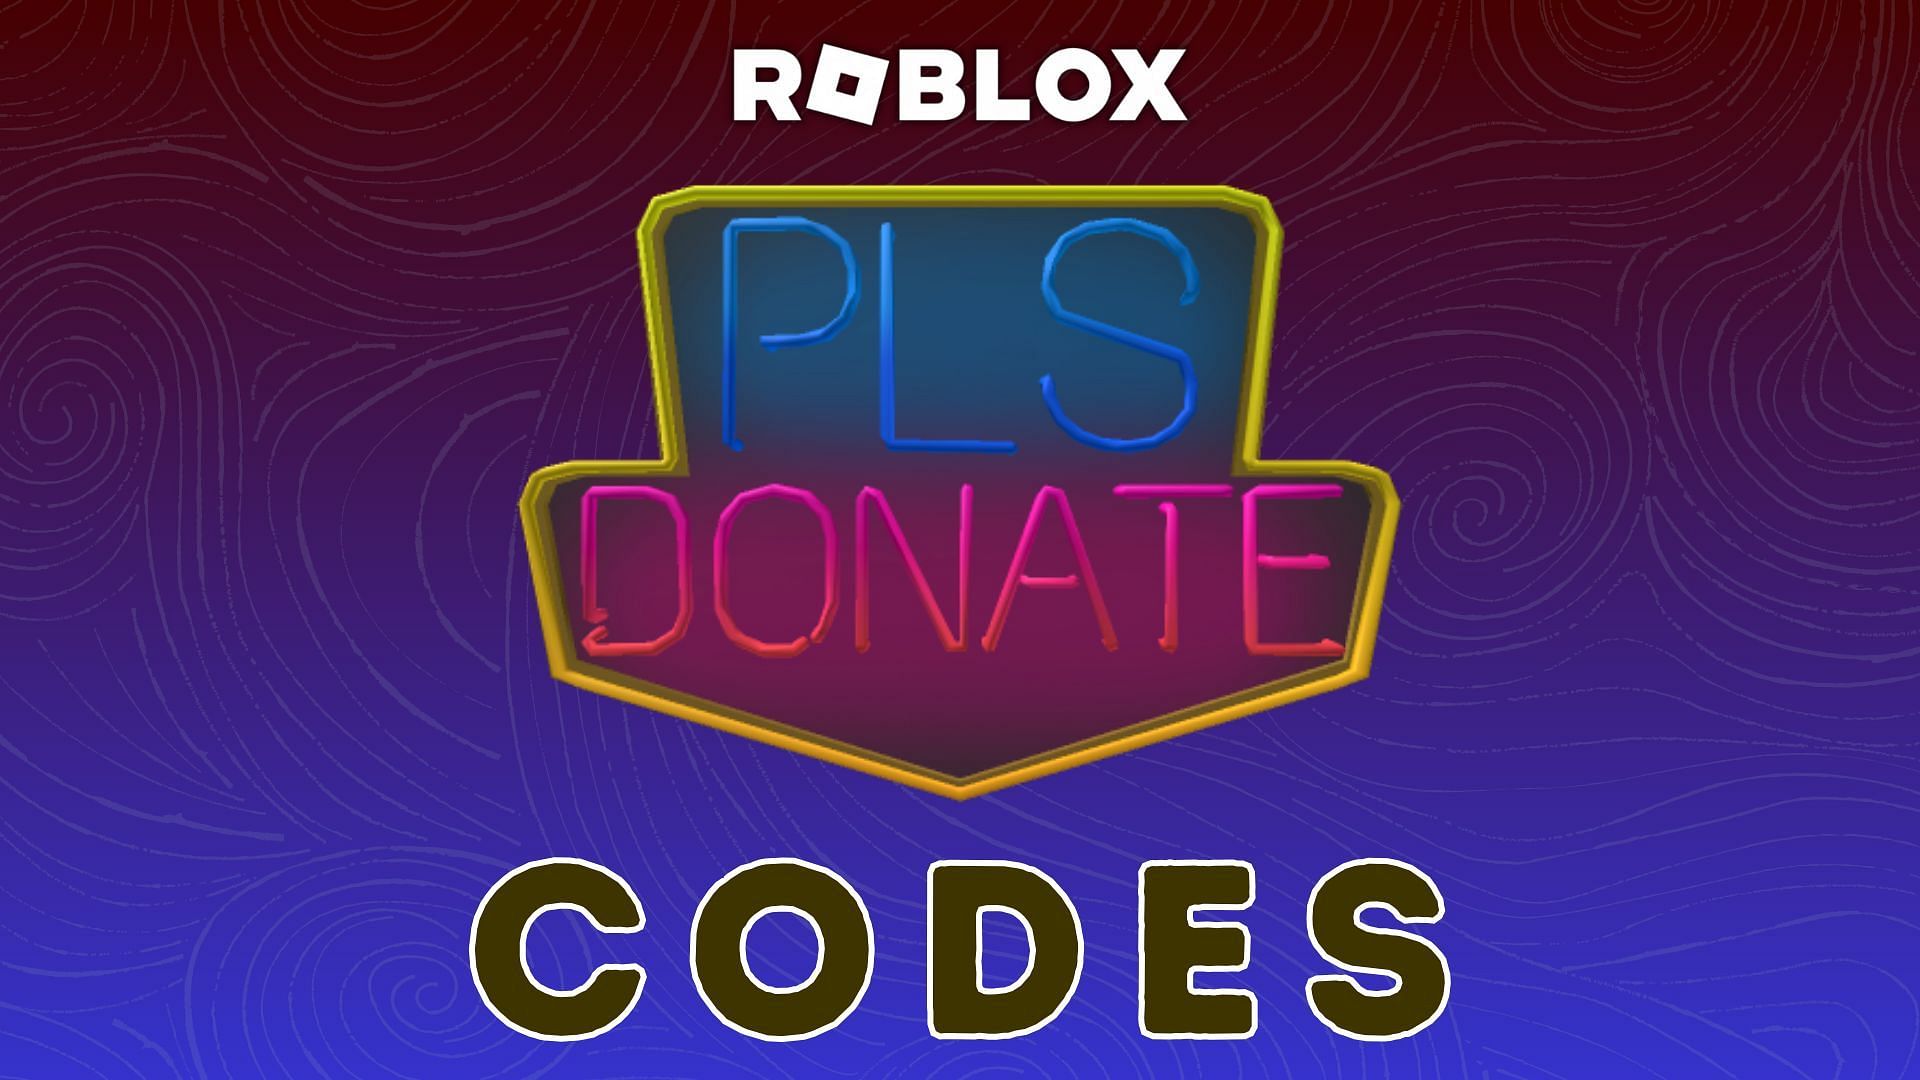 Pls donate роблокс коды